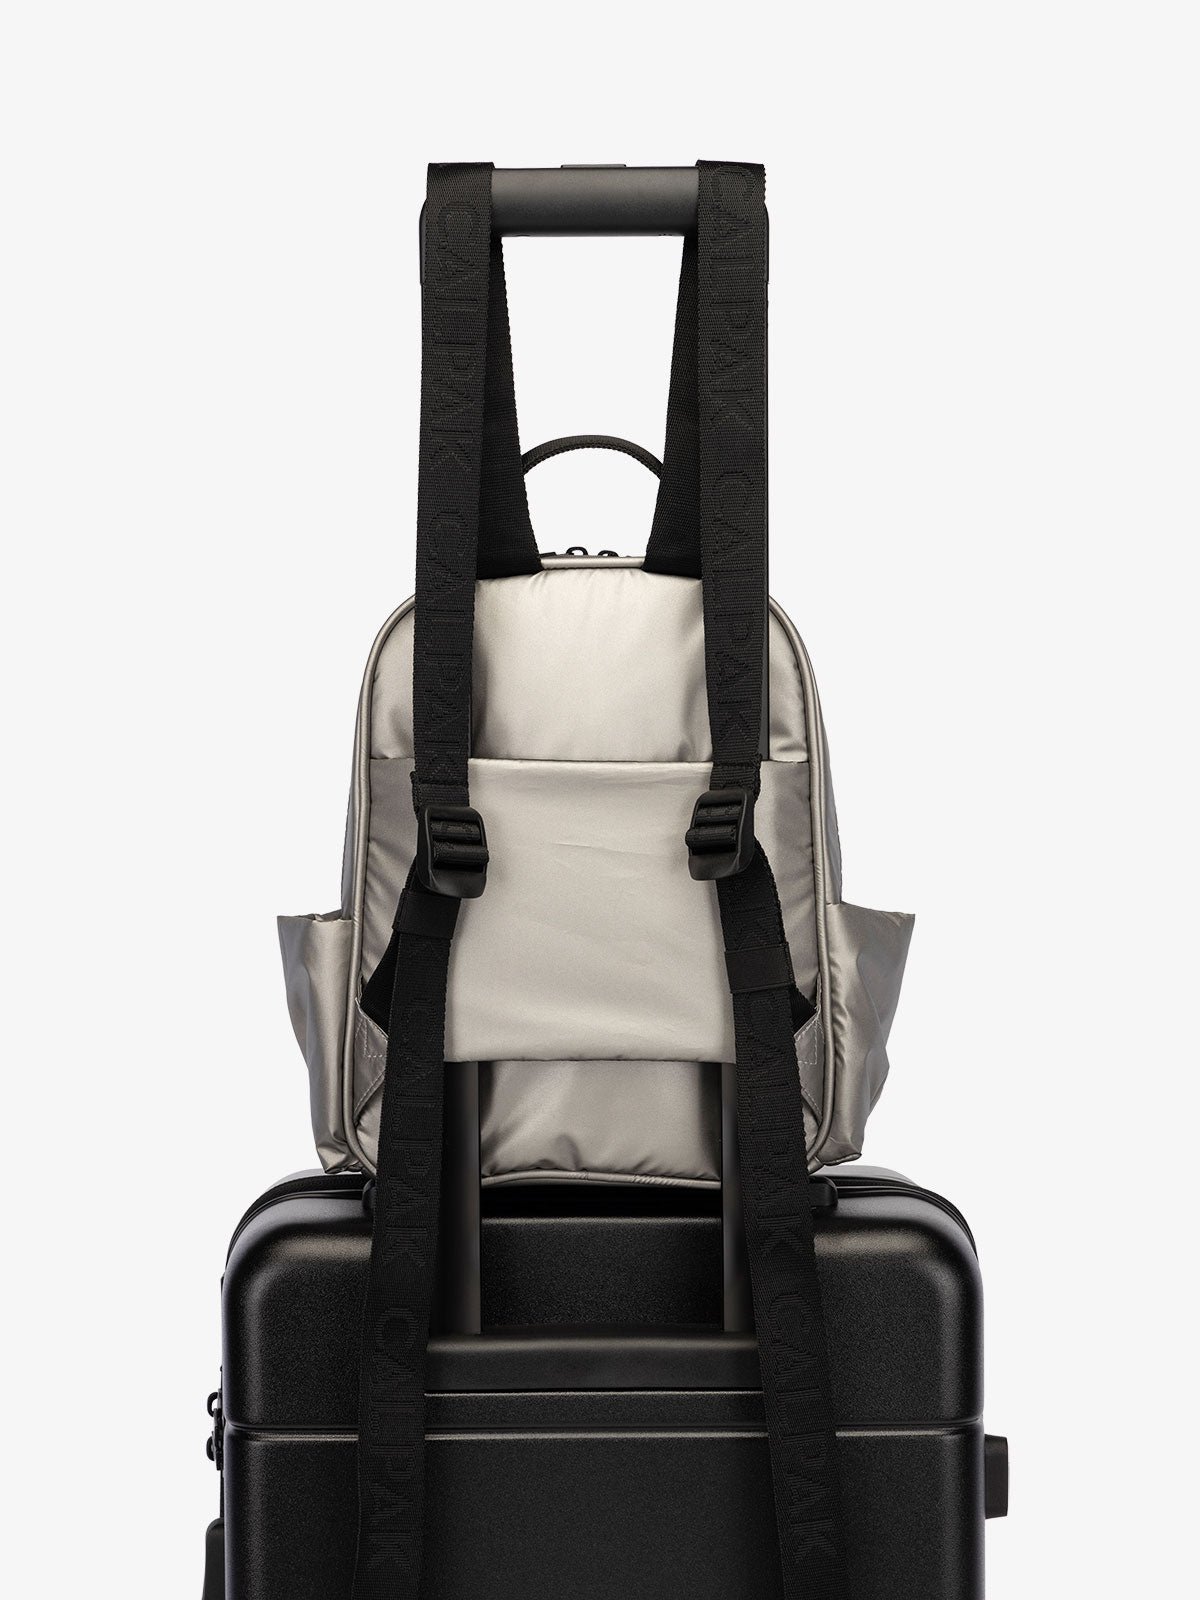 CALPAK Luka small travel Backpack with luggage sleeve and adjustable straps in metallic gray gunmetal